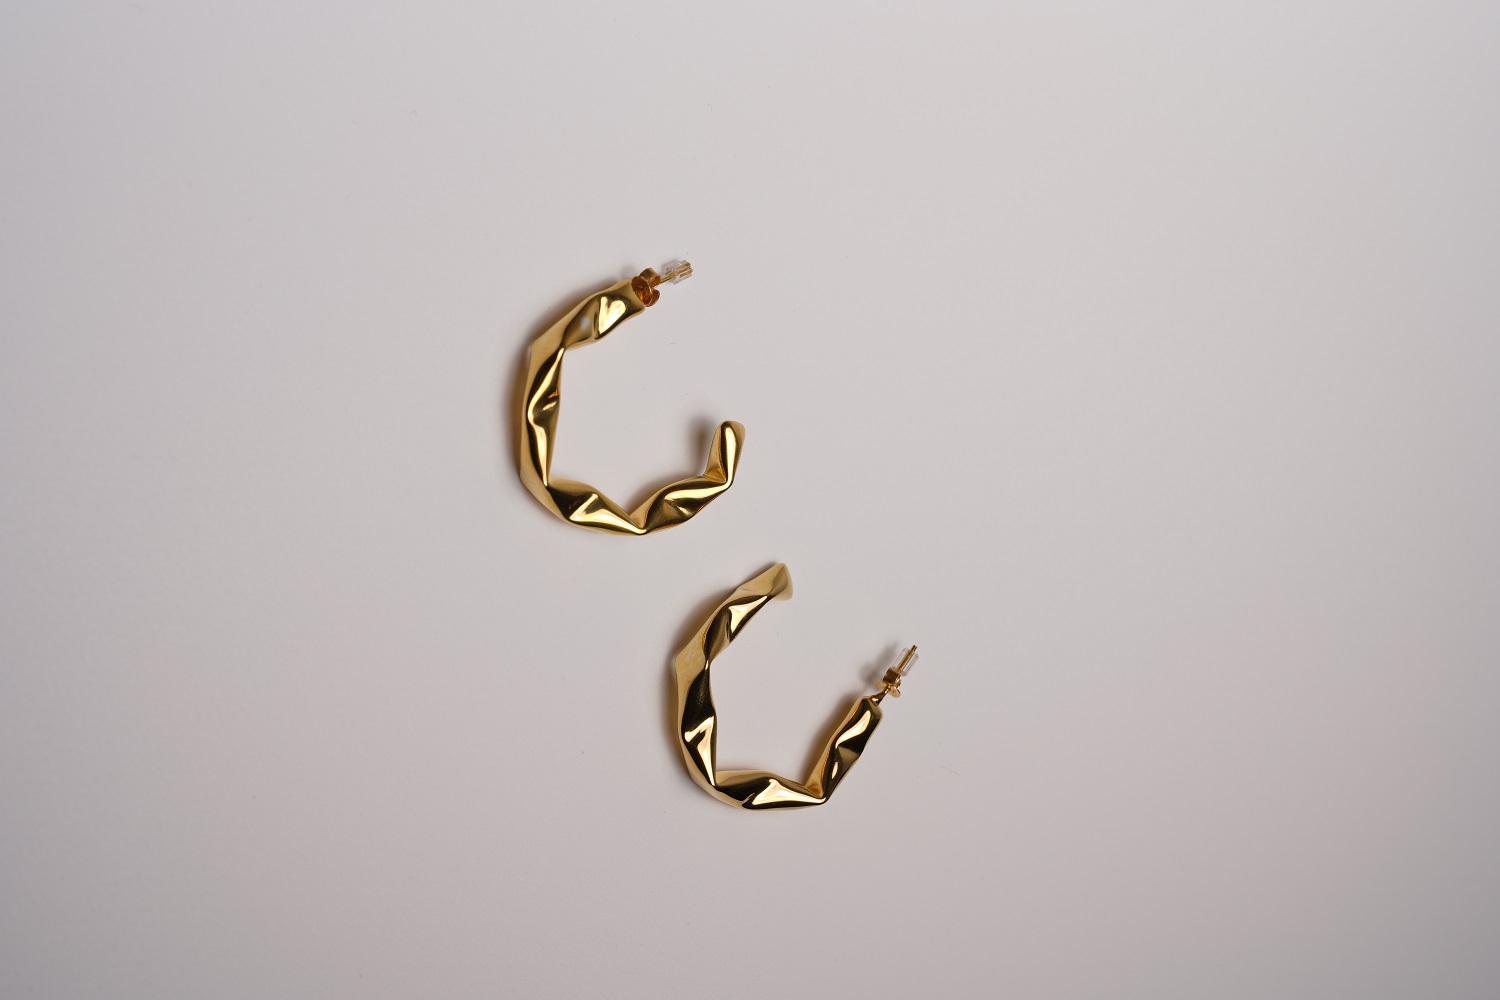 24K yellow gold vermeil medium earring hoops in 925 silver